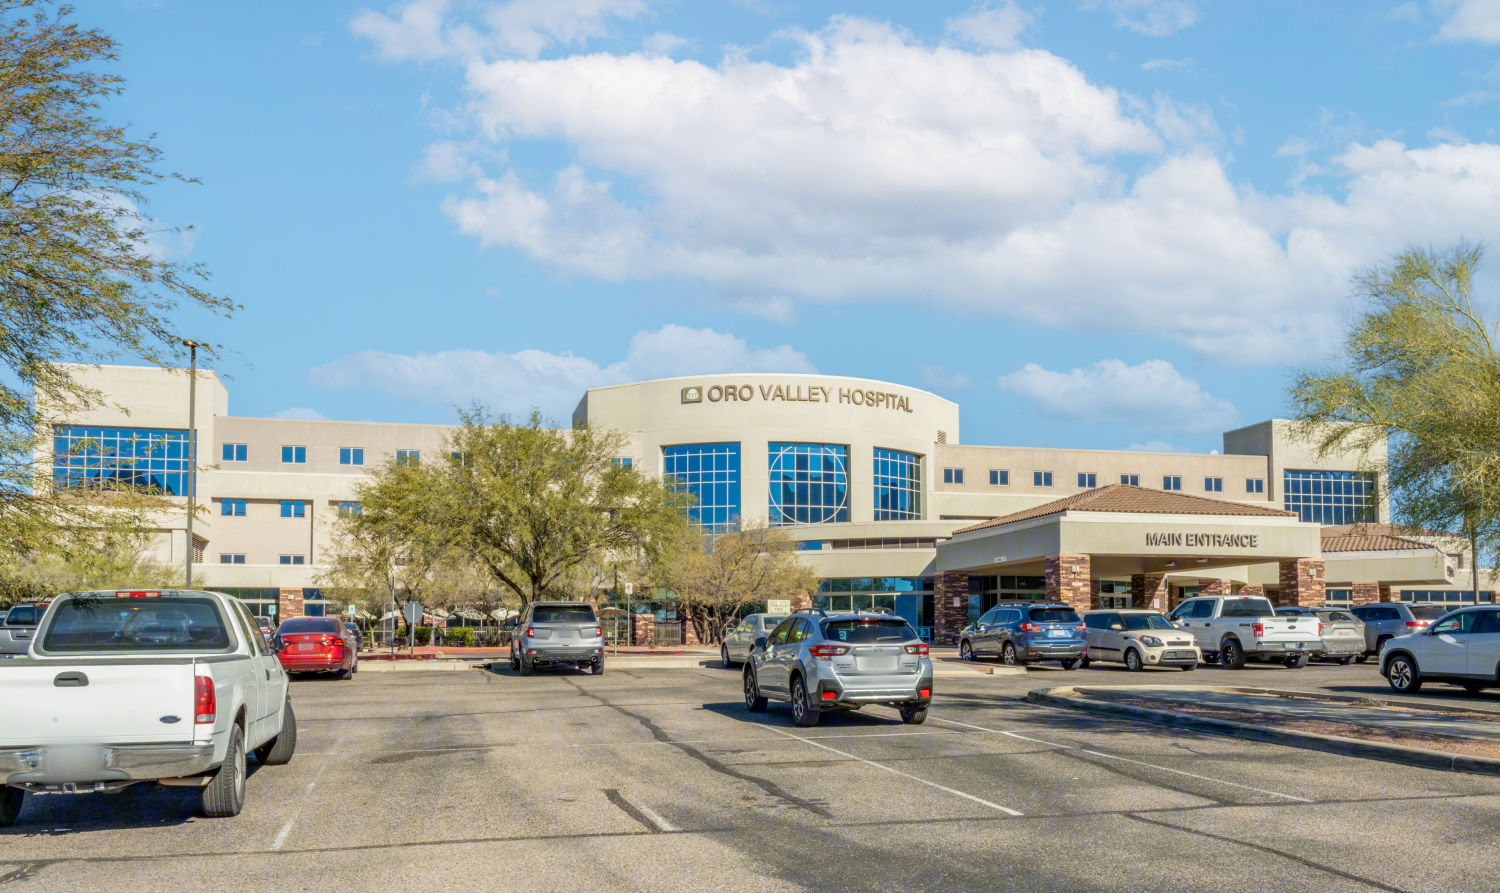 Oro Valley Hospitals: Providing Top-Notch Healthcare Services